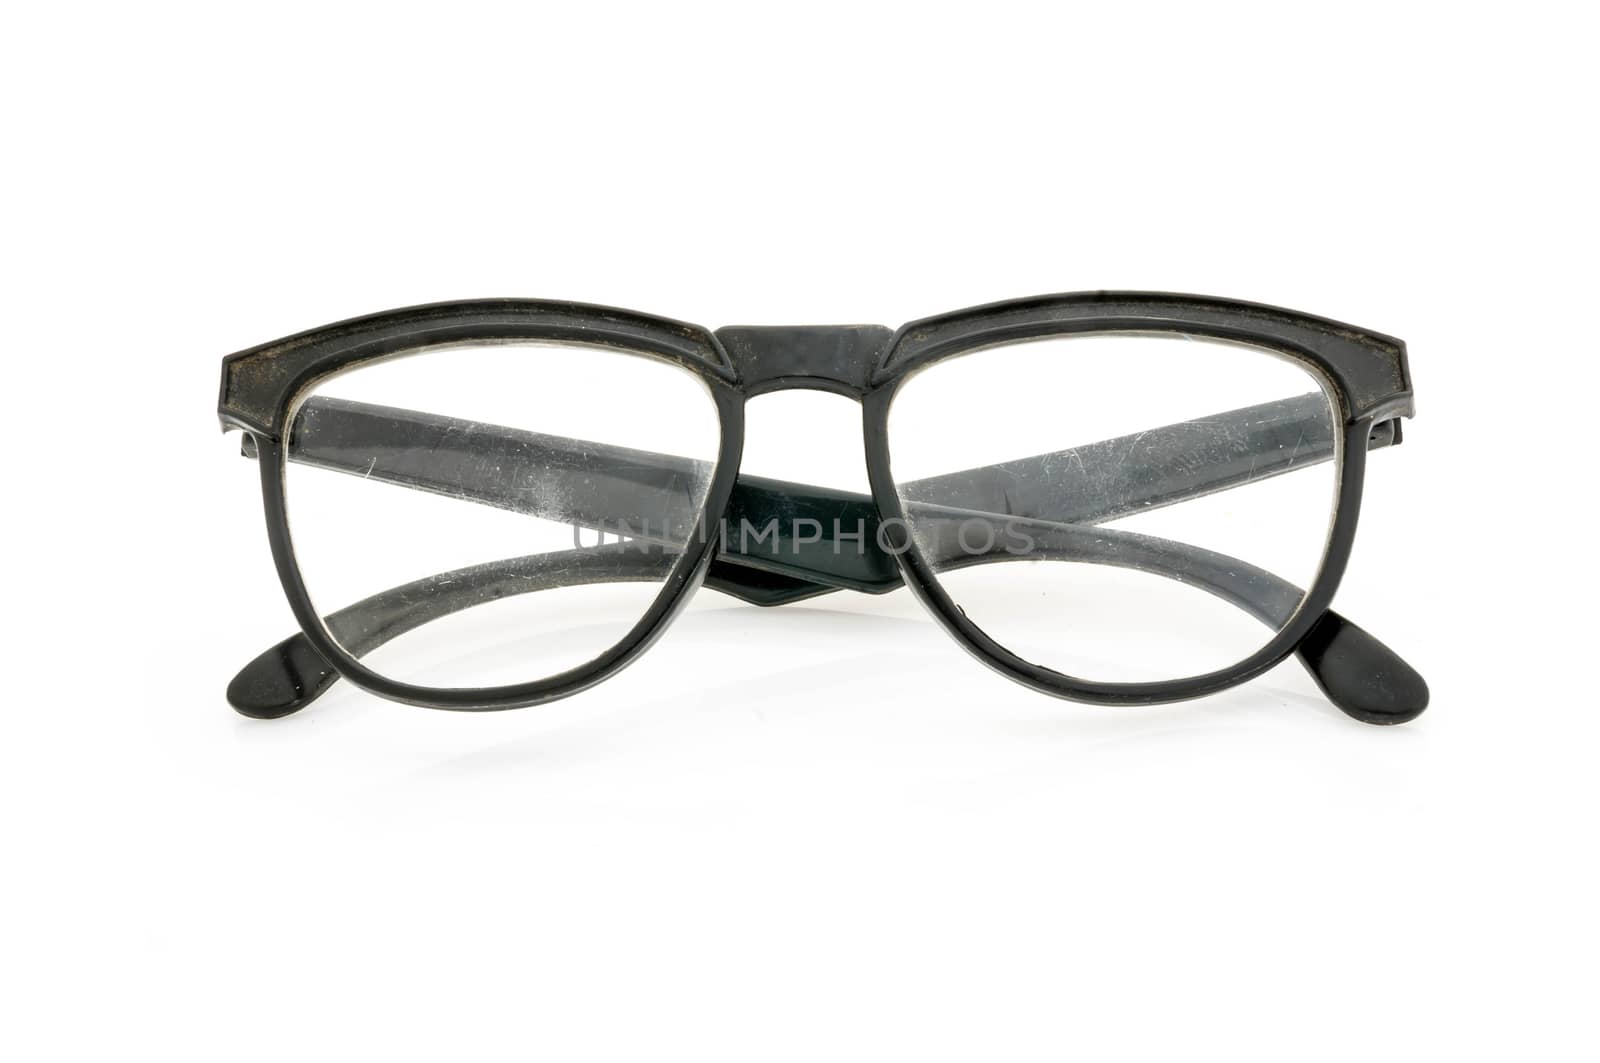 Old Black Eye Glasses by seksan44